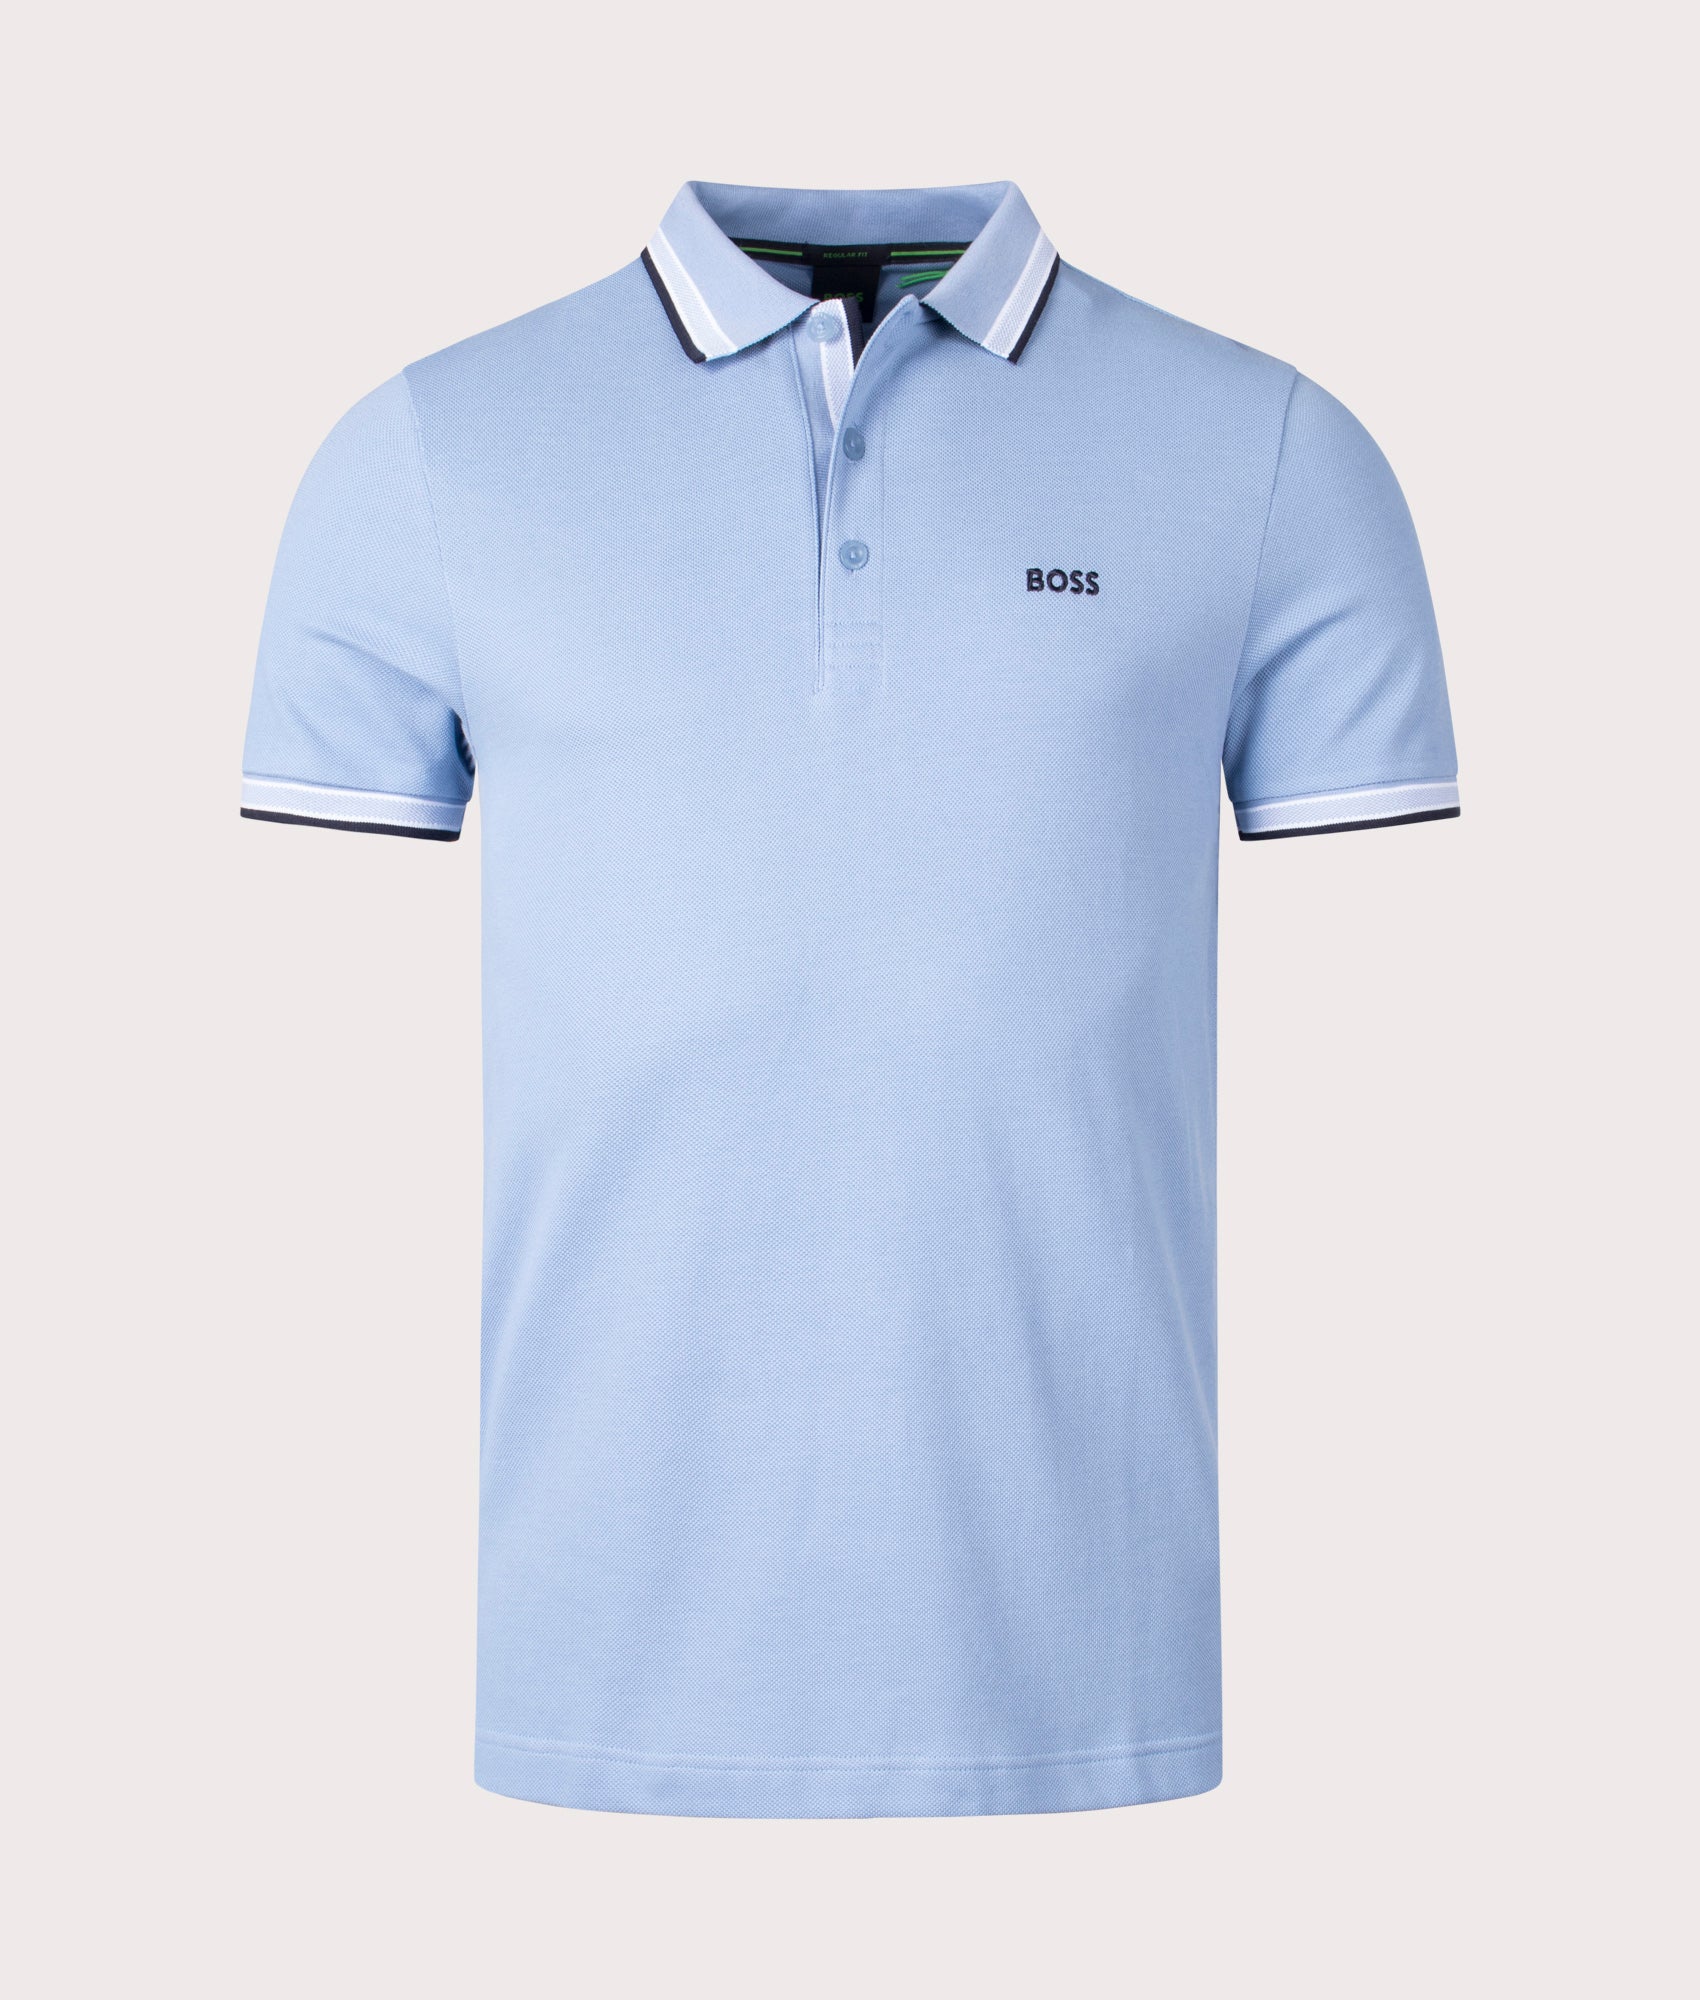 BOSS Mens Paddy Polo Shirt - Colour: 498 Open Blue - Size: Medium